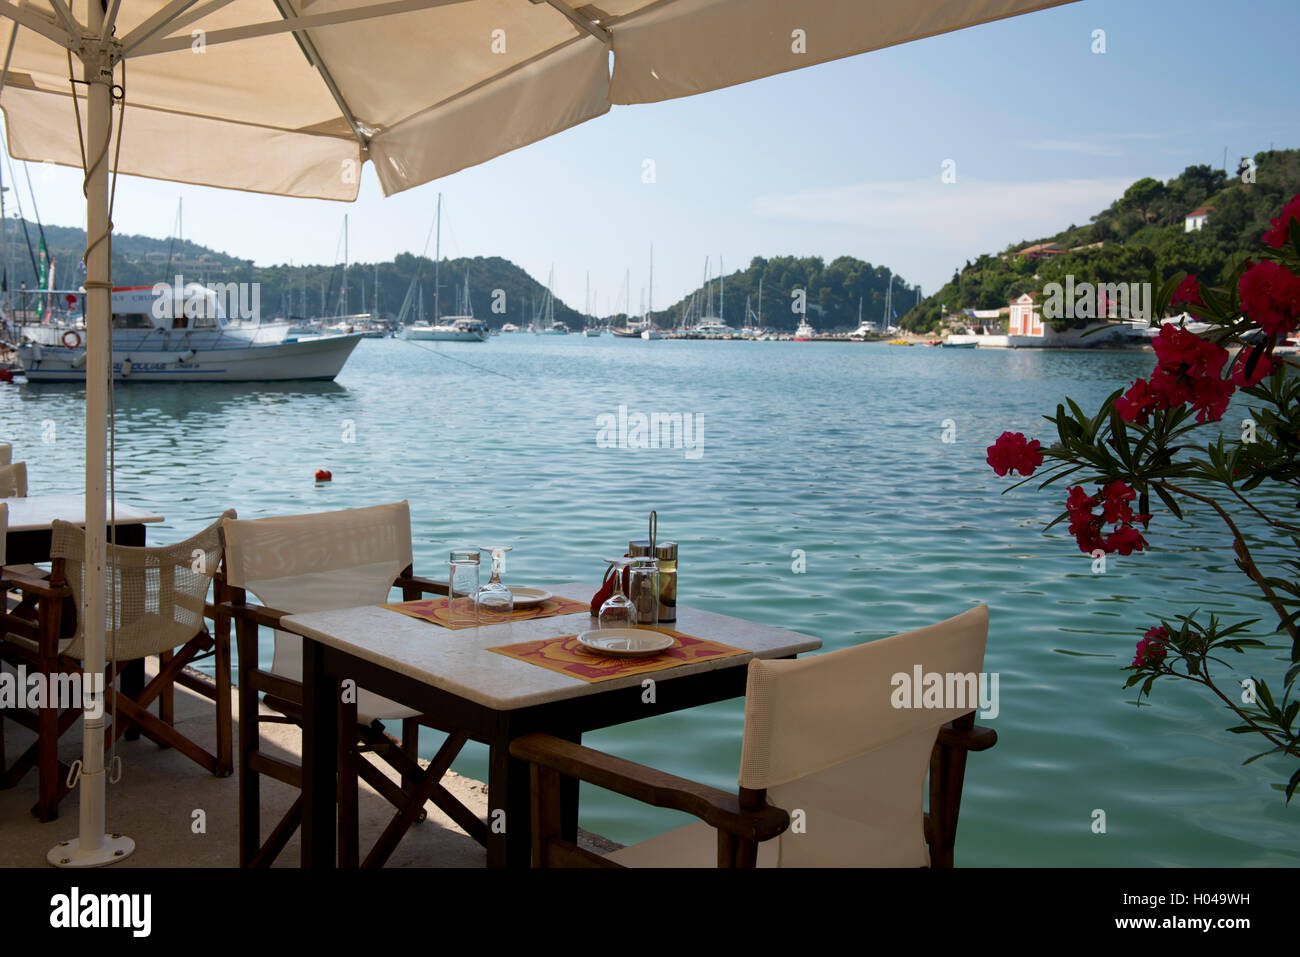 A waterside taverna table in Lakka, Paxos, The Ionian Islands, Greece, Europe Stock Photo